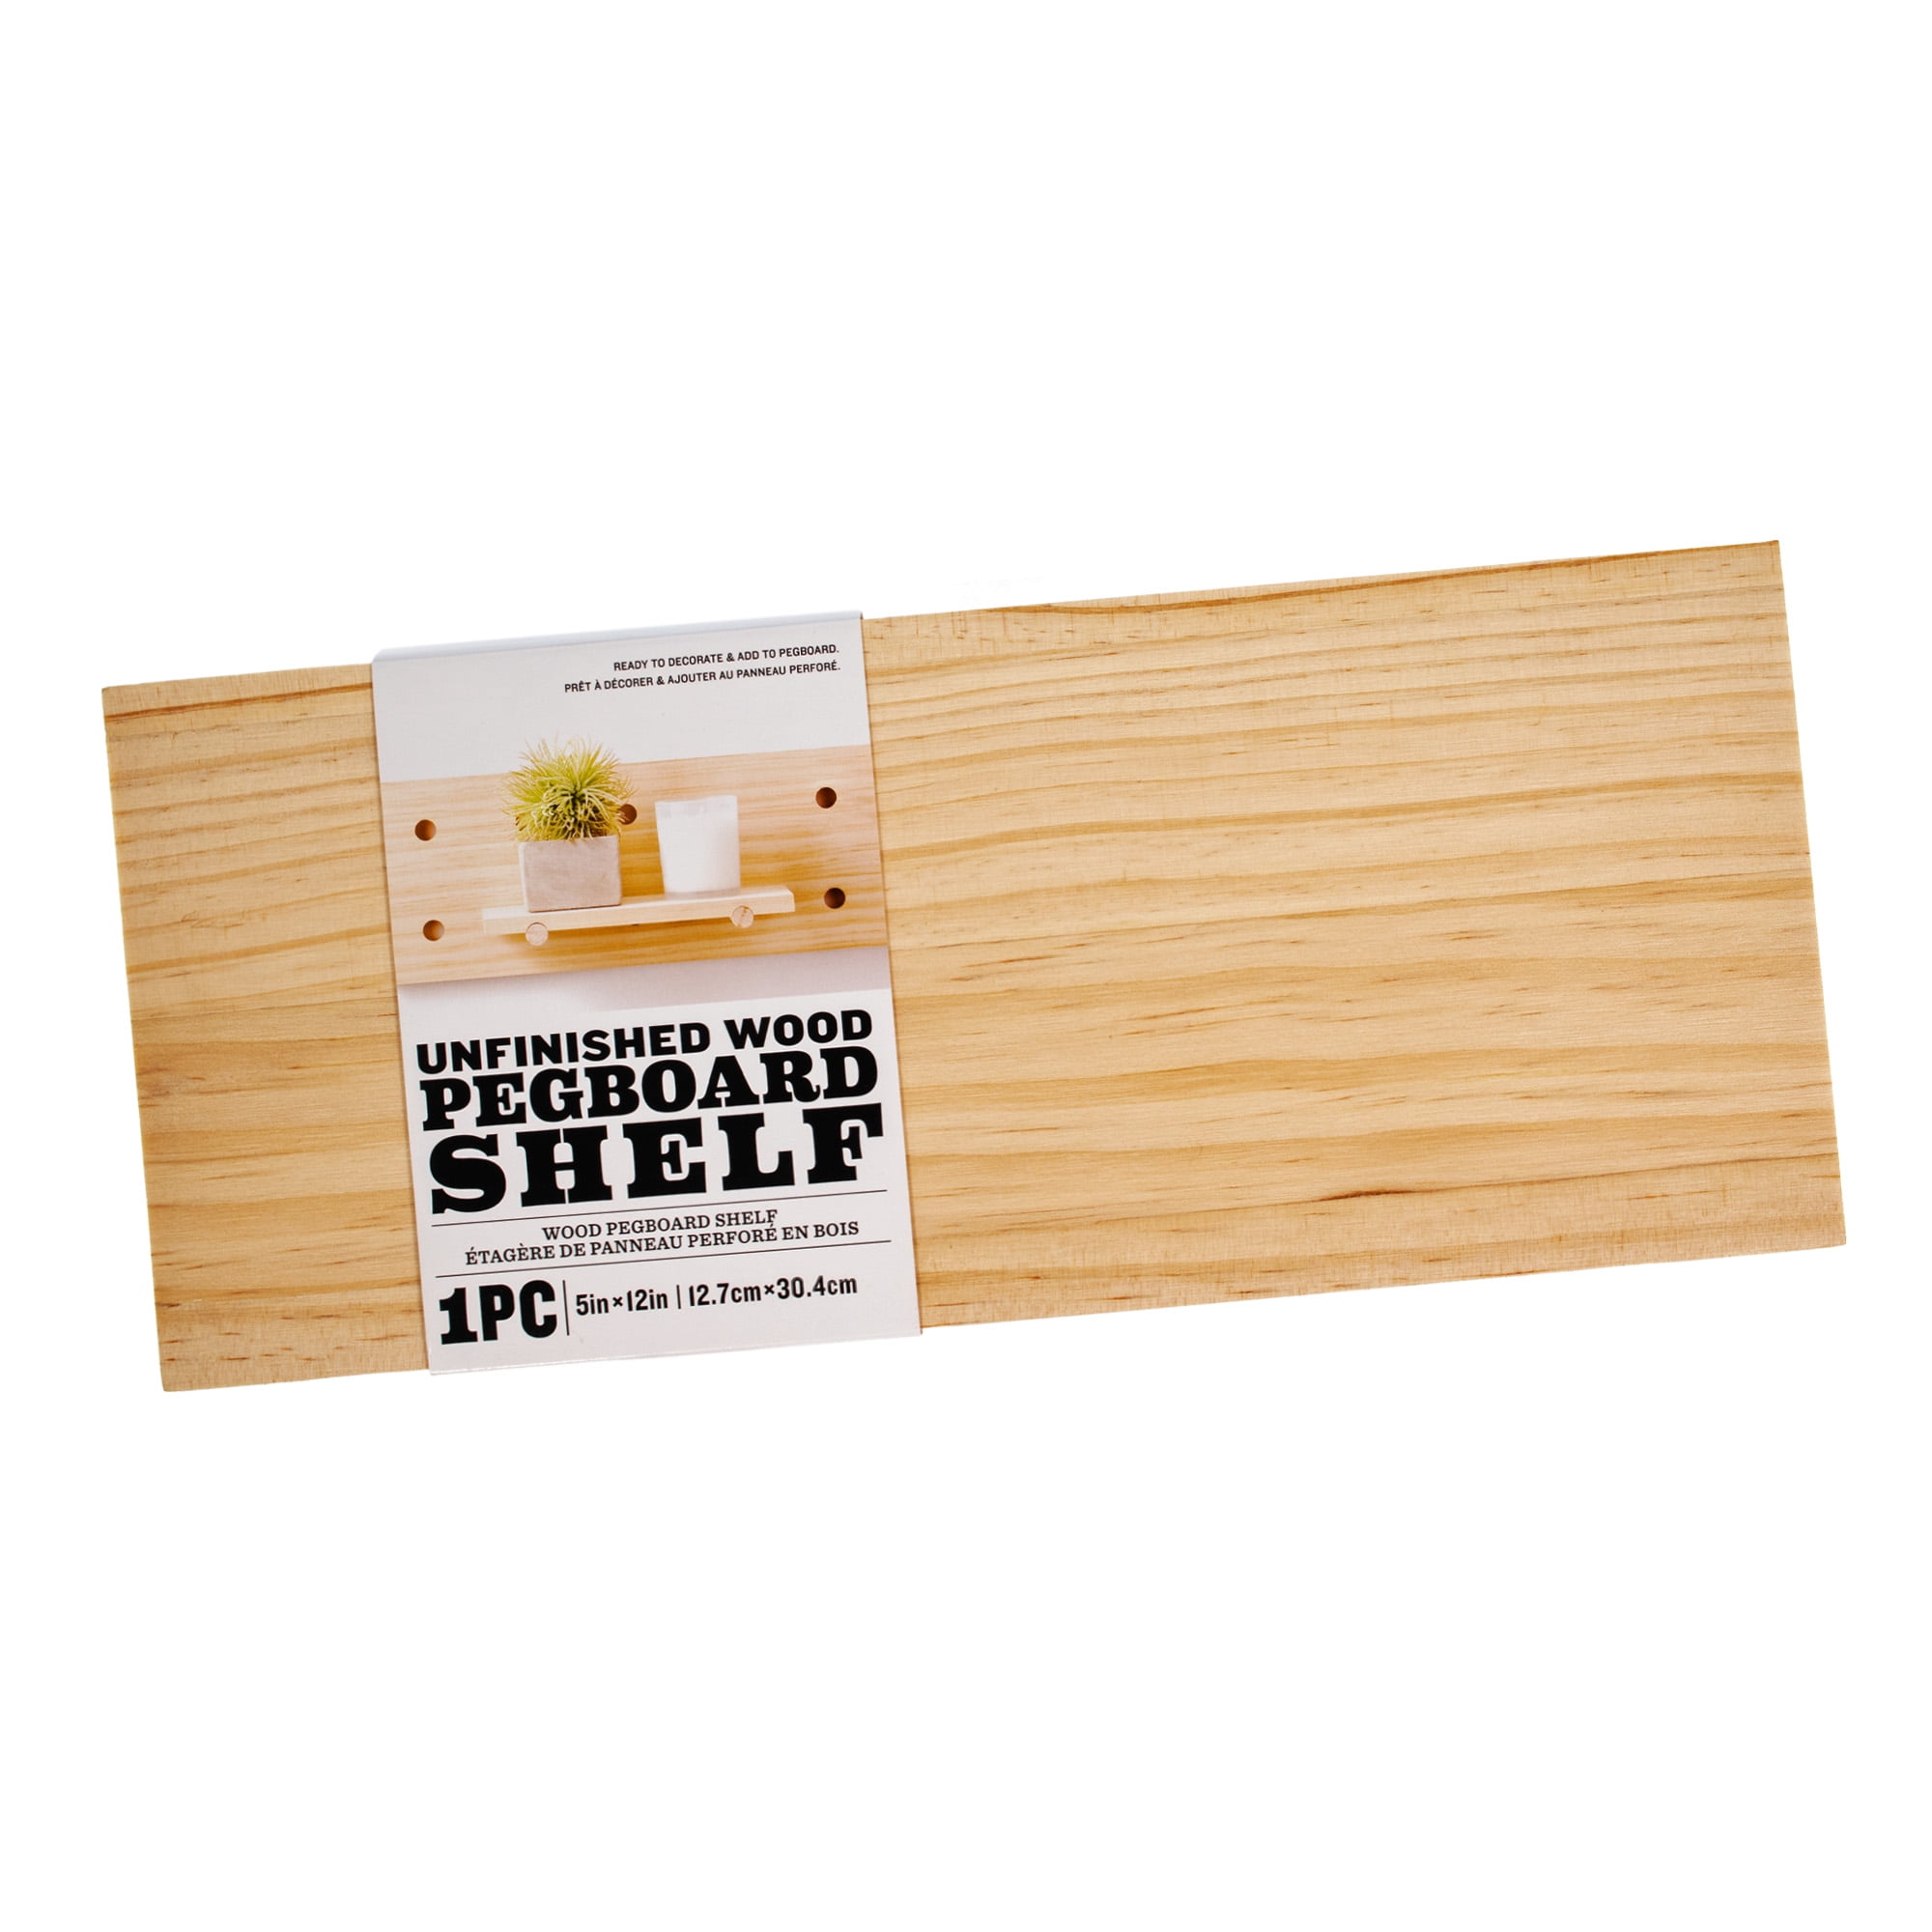 16 Inch Pegboard Shelf Solid Wood Unfinished Poplar 